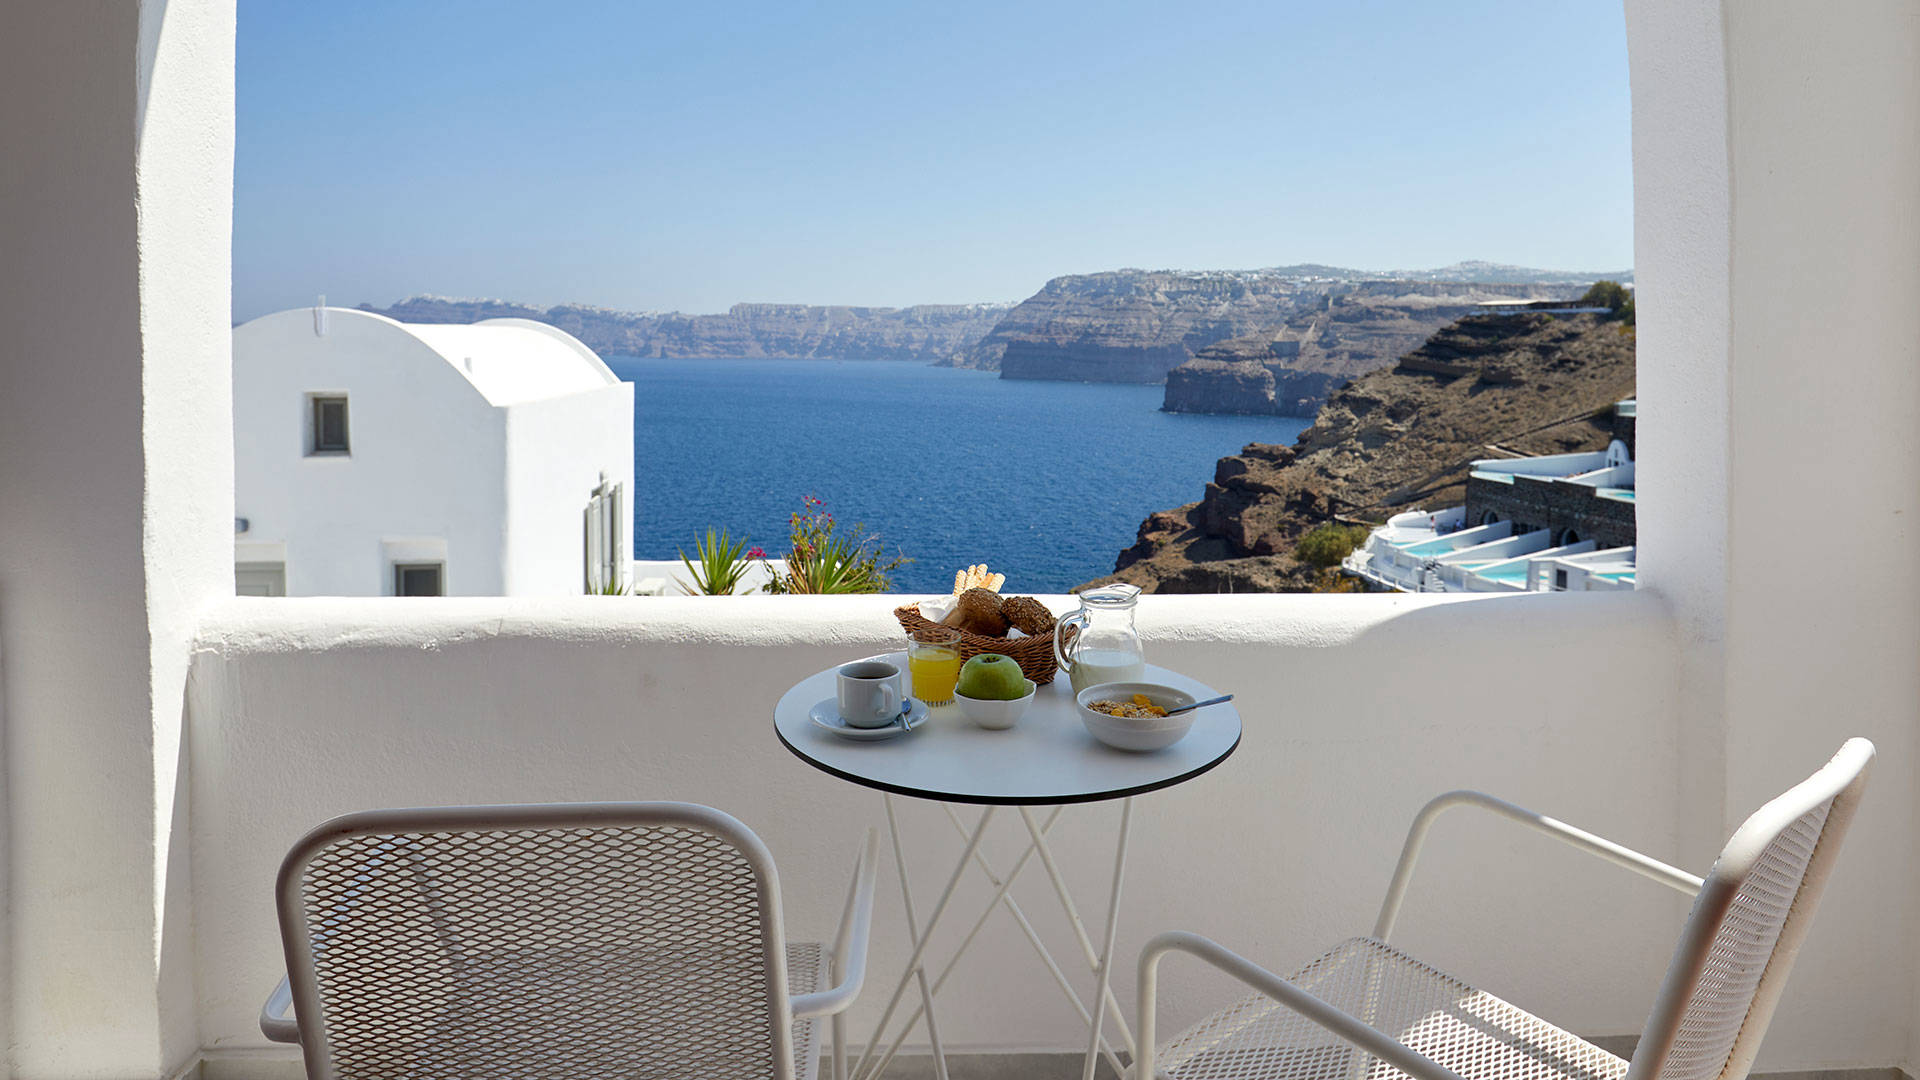 
Santorini View Hotel breakfast at a sea view balcony